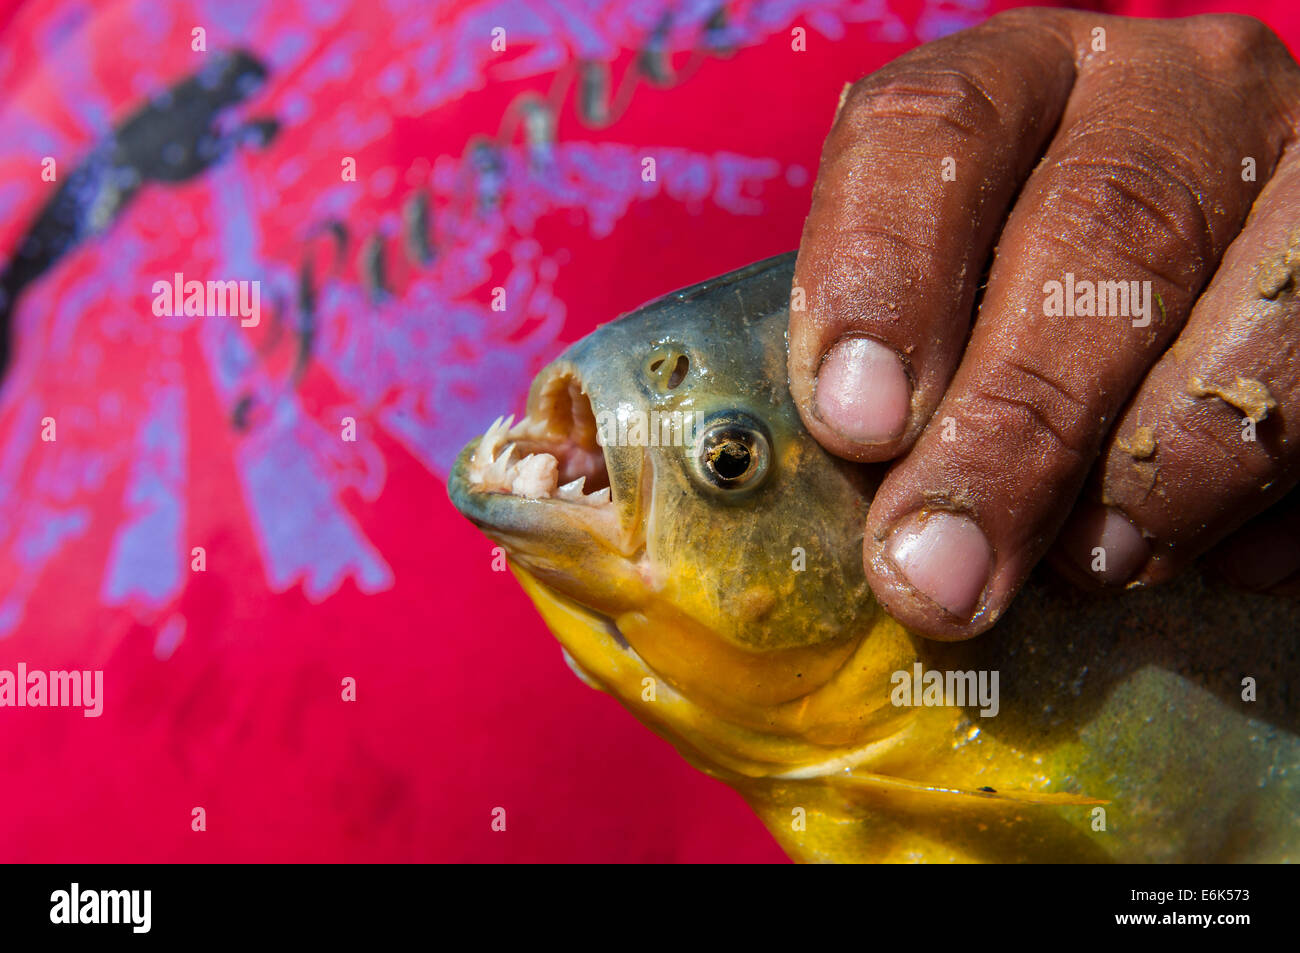 Man holding a piranha, Pantanal, Mato Grosso do Sul, Brazil Stock Photo